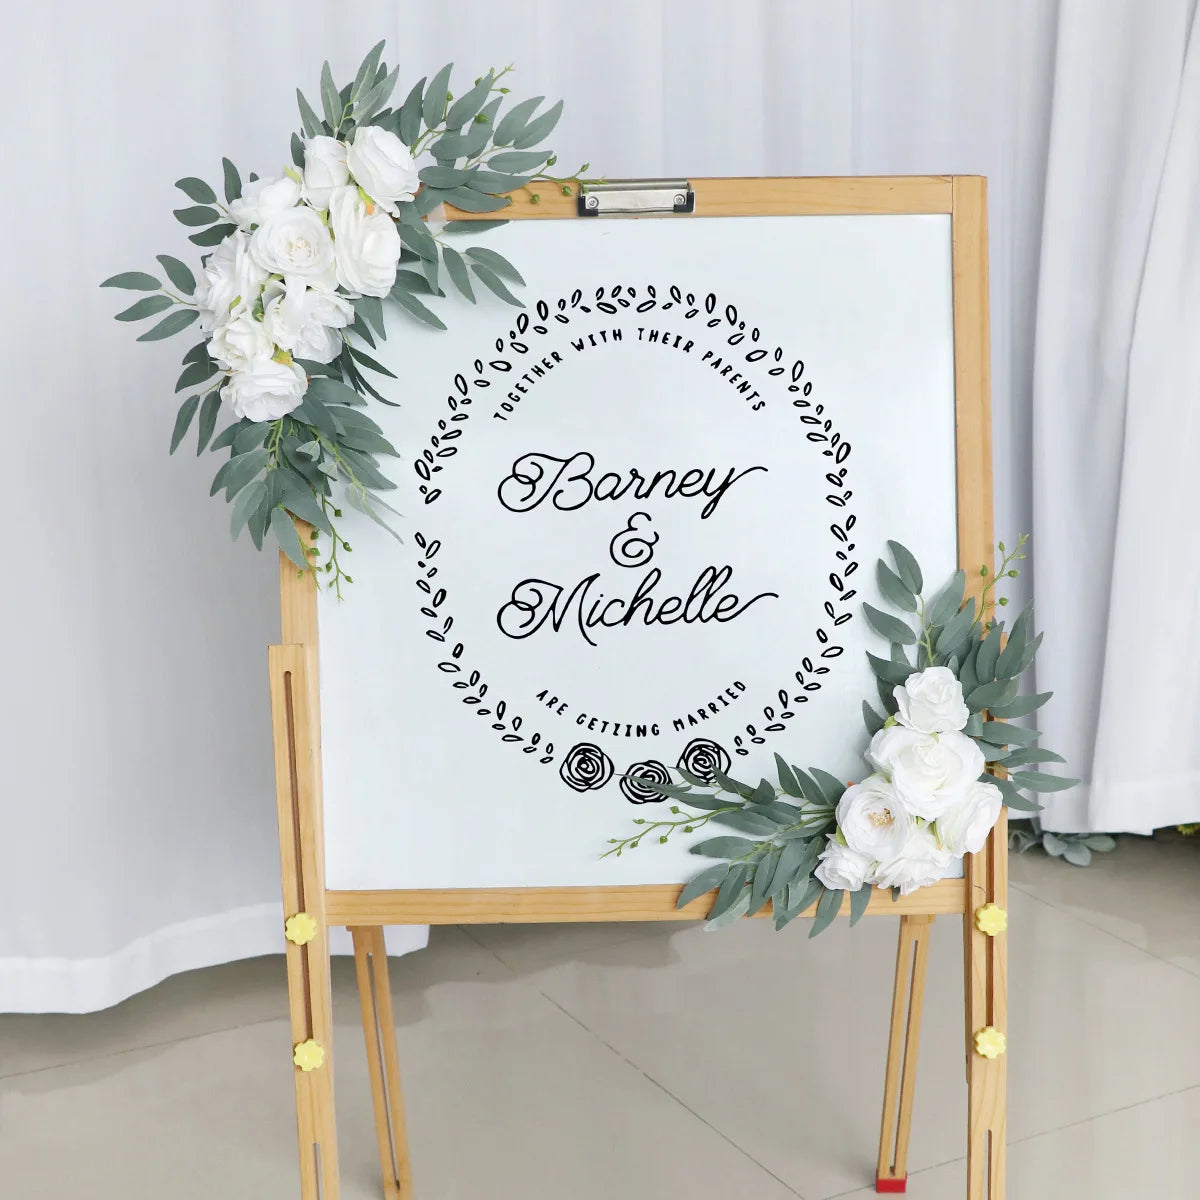 Yannew Artificial Wedding Arch Flowers Kit